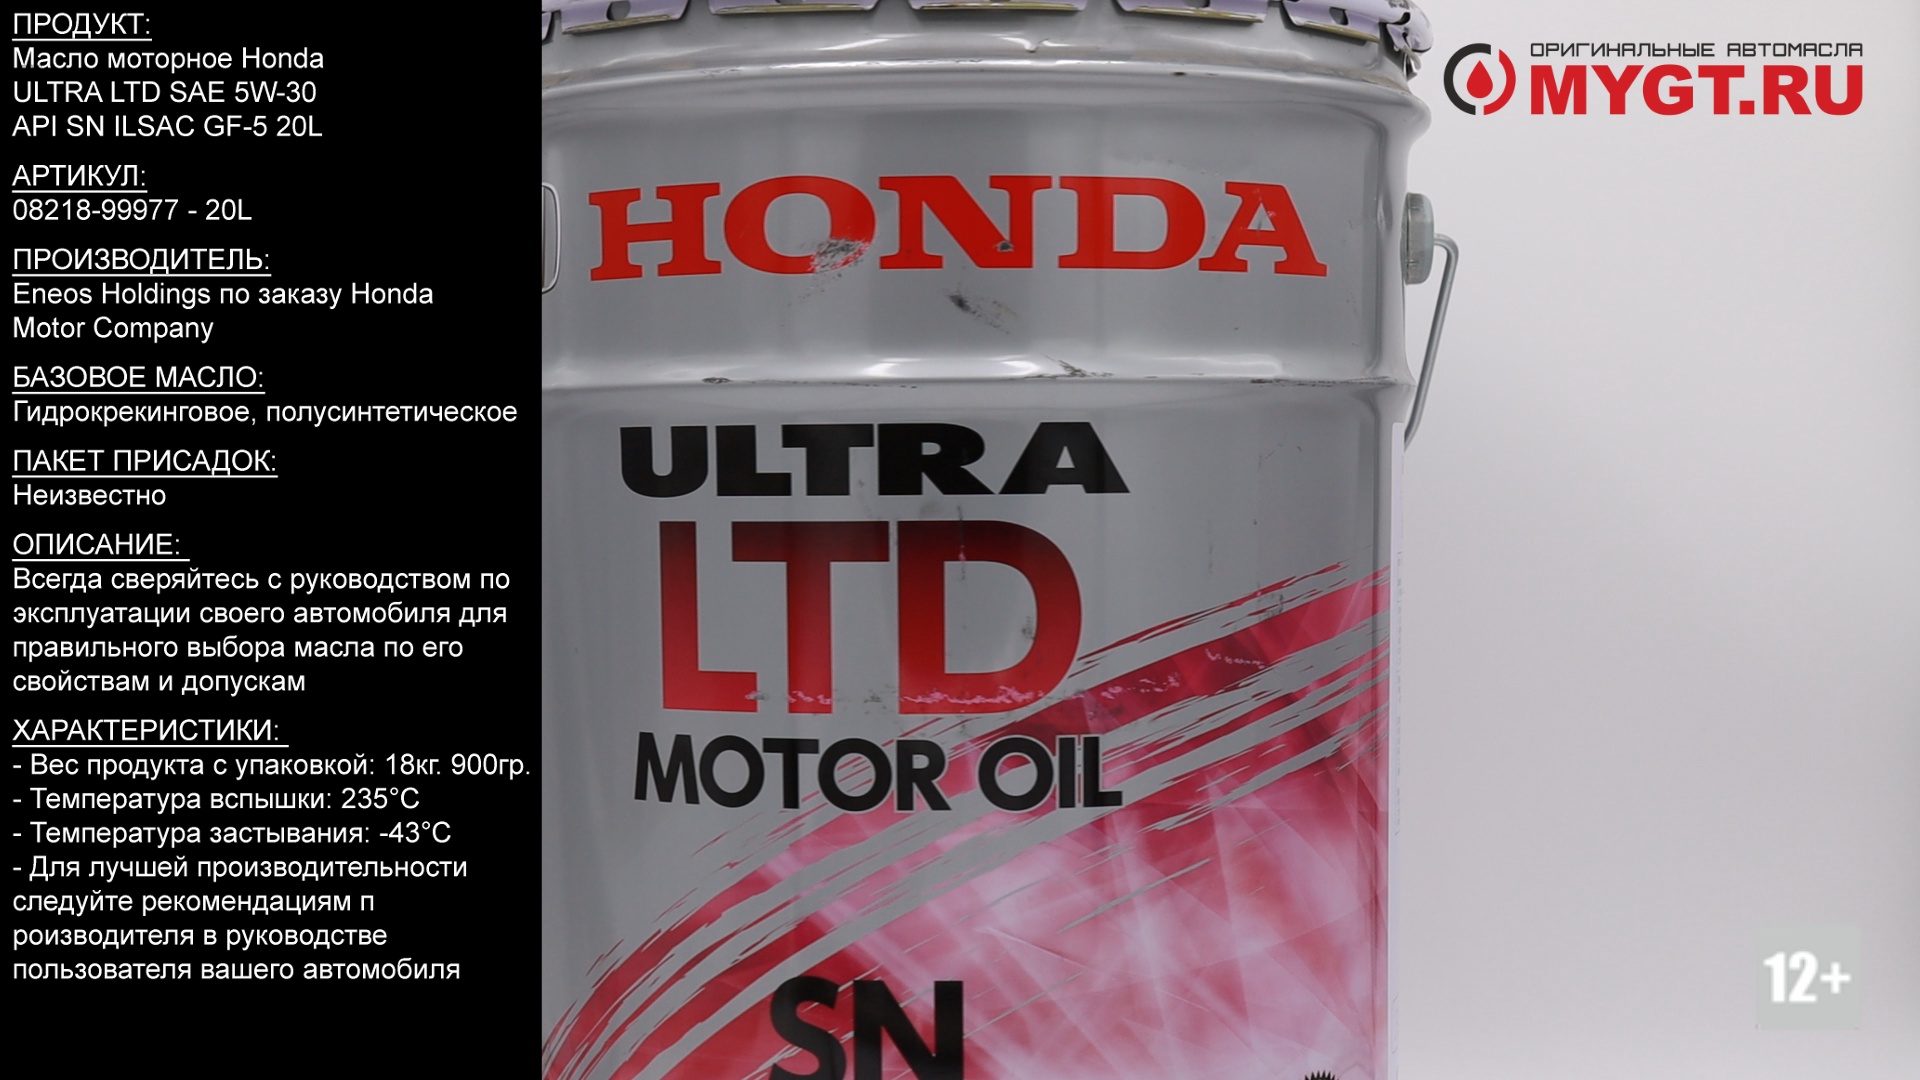 Honda Ultra Ltd 5w30 SN. Honda Ultra Leo Motor Oil SN 5w-30 ILSAC gf-5. Honda Ultra Ltd SAE 5w-30. Honda Ultra Ltd SP 5w-30 (20,0). Масло api gf 5